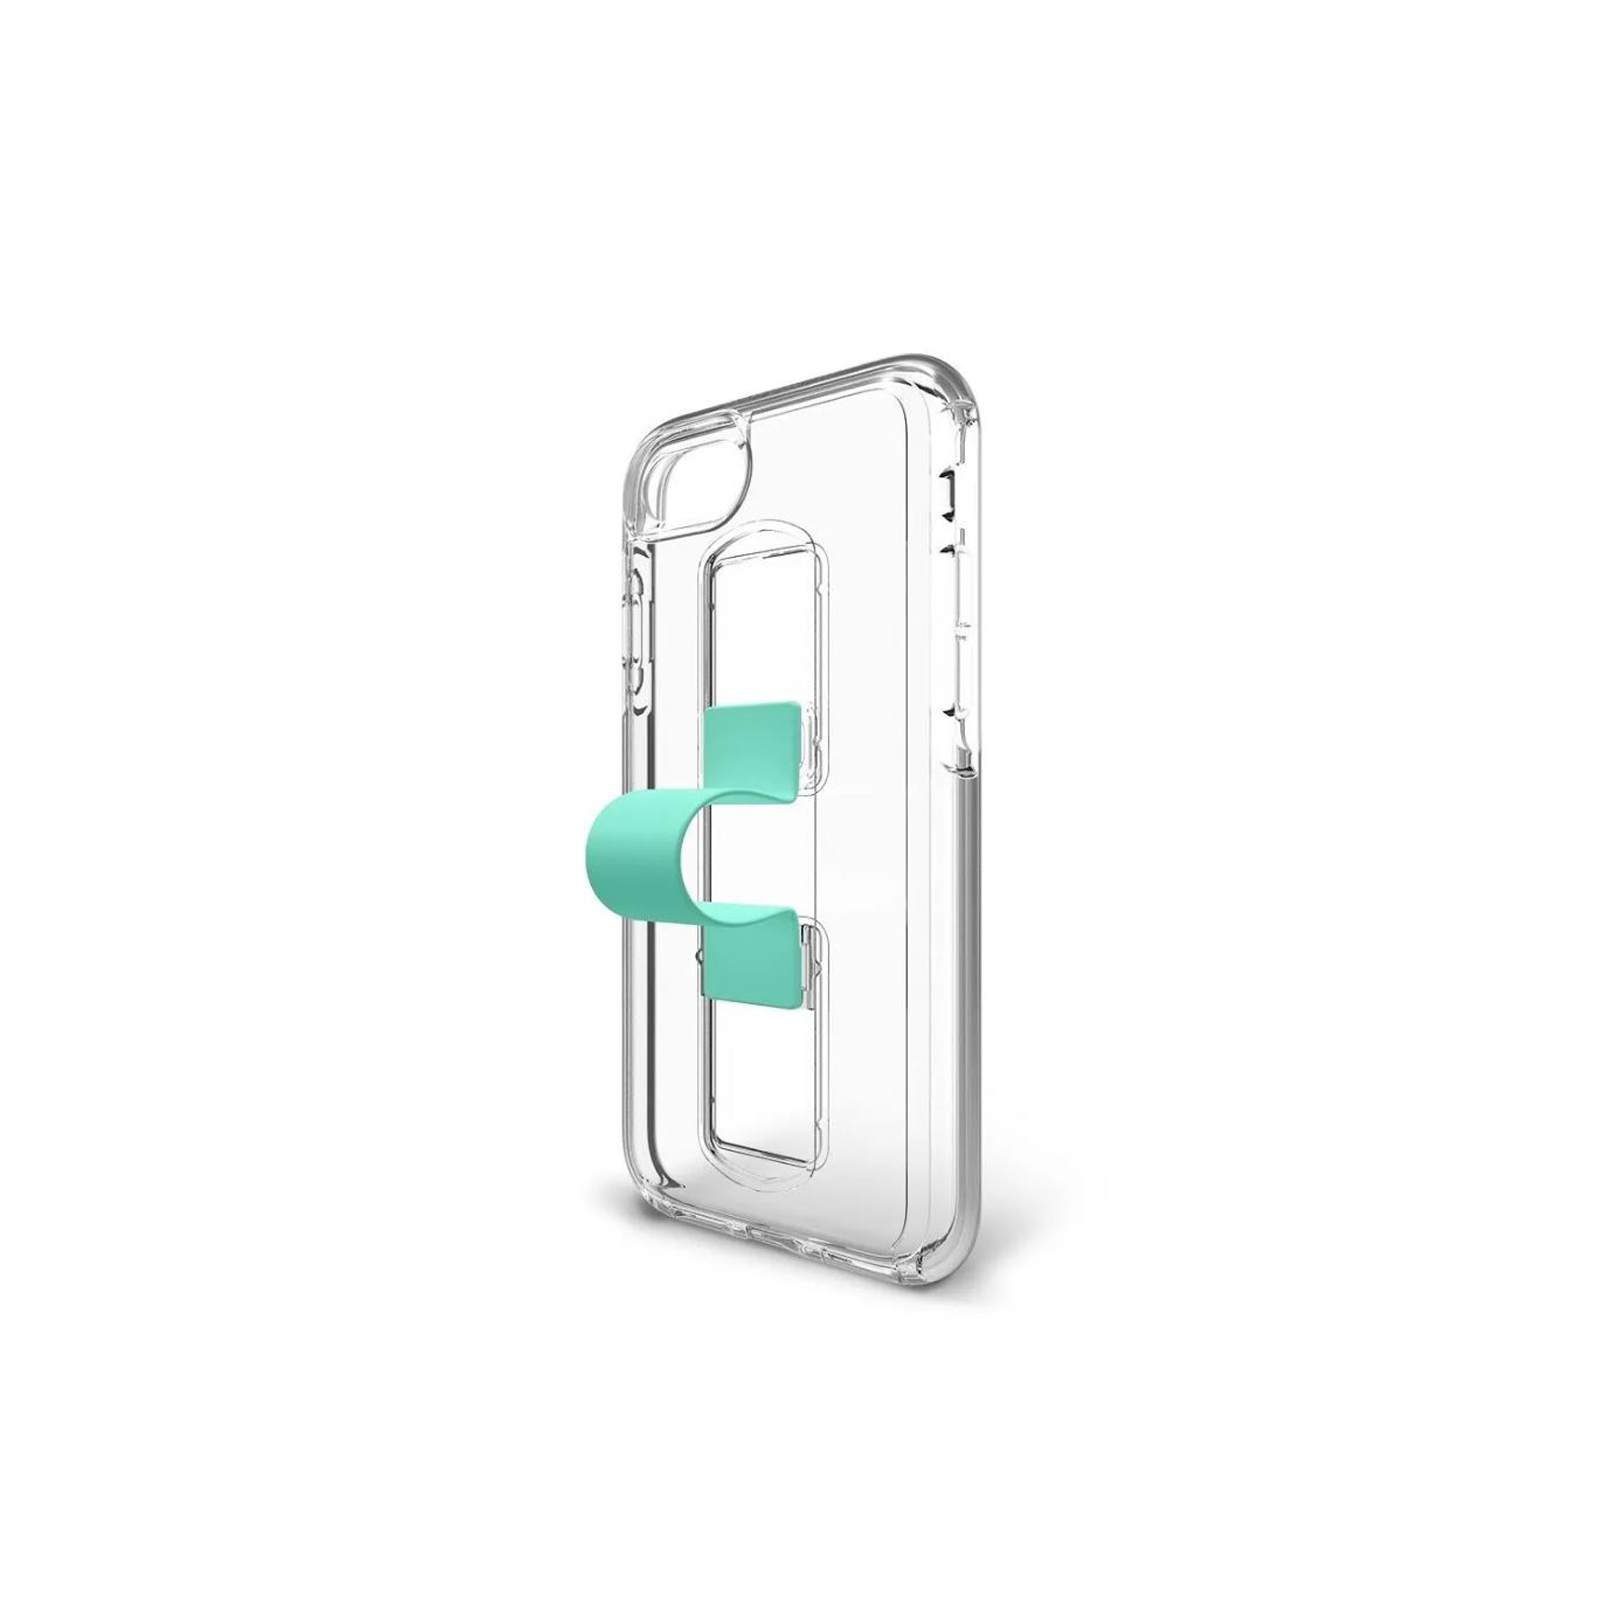 SlideVue iPhone 6/7/8 Clear/Green Case - Brand New